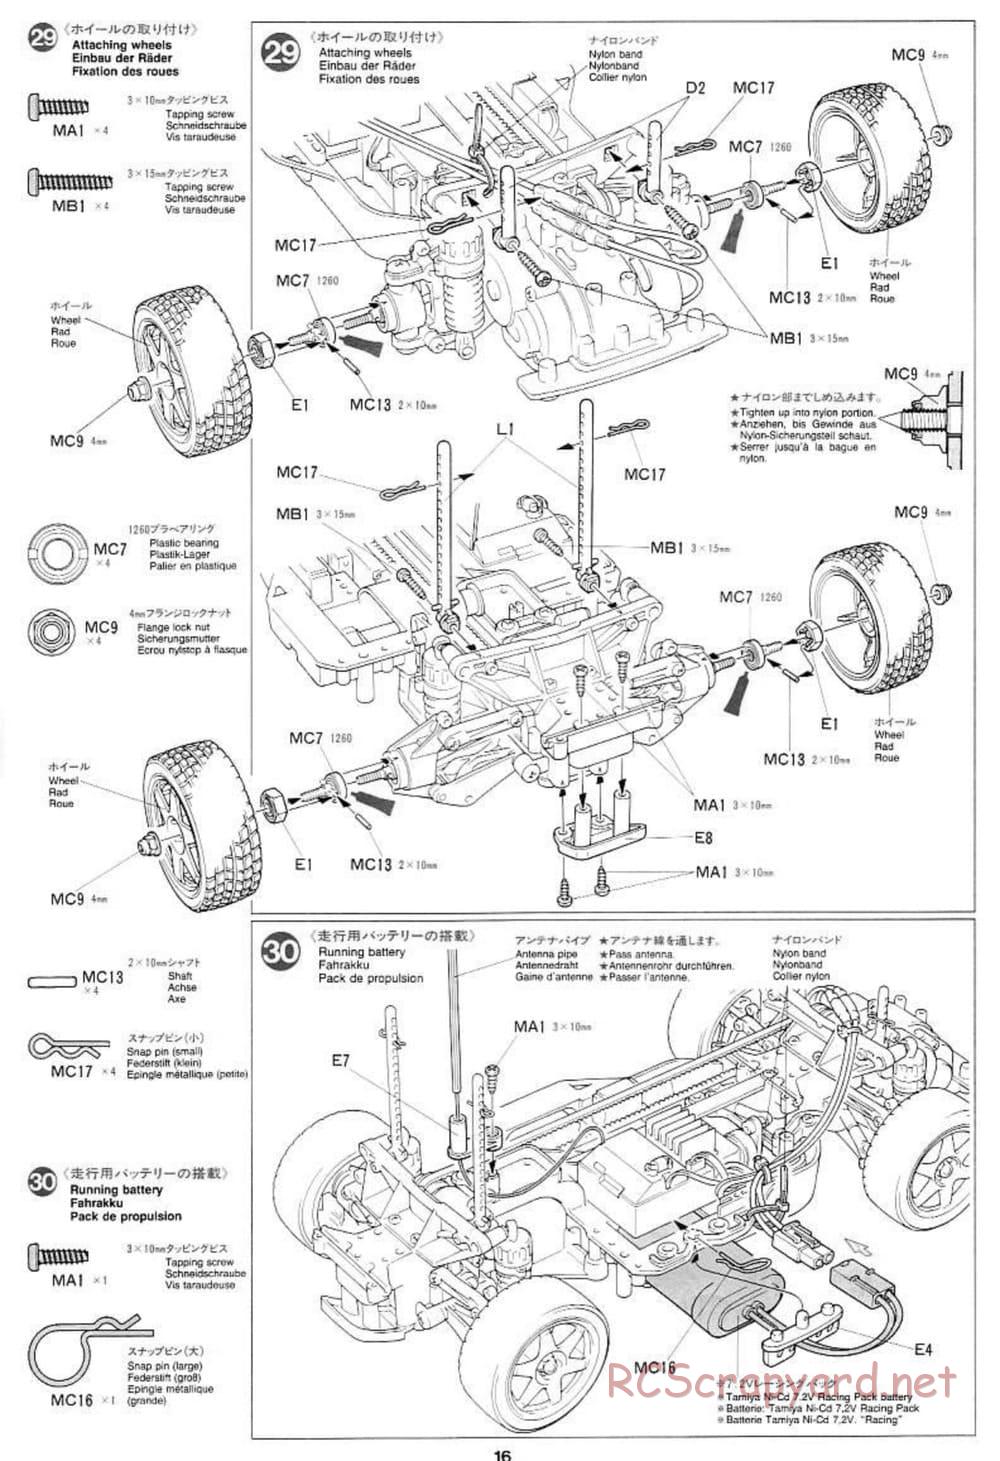 Tamiya - Toyota Corolla WRC - TA-03FS Chassis - Manual - Page 16